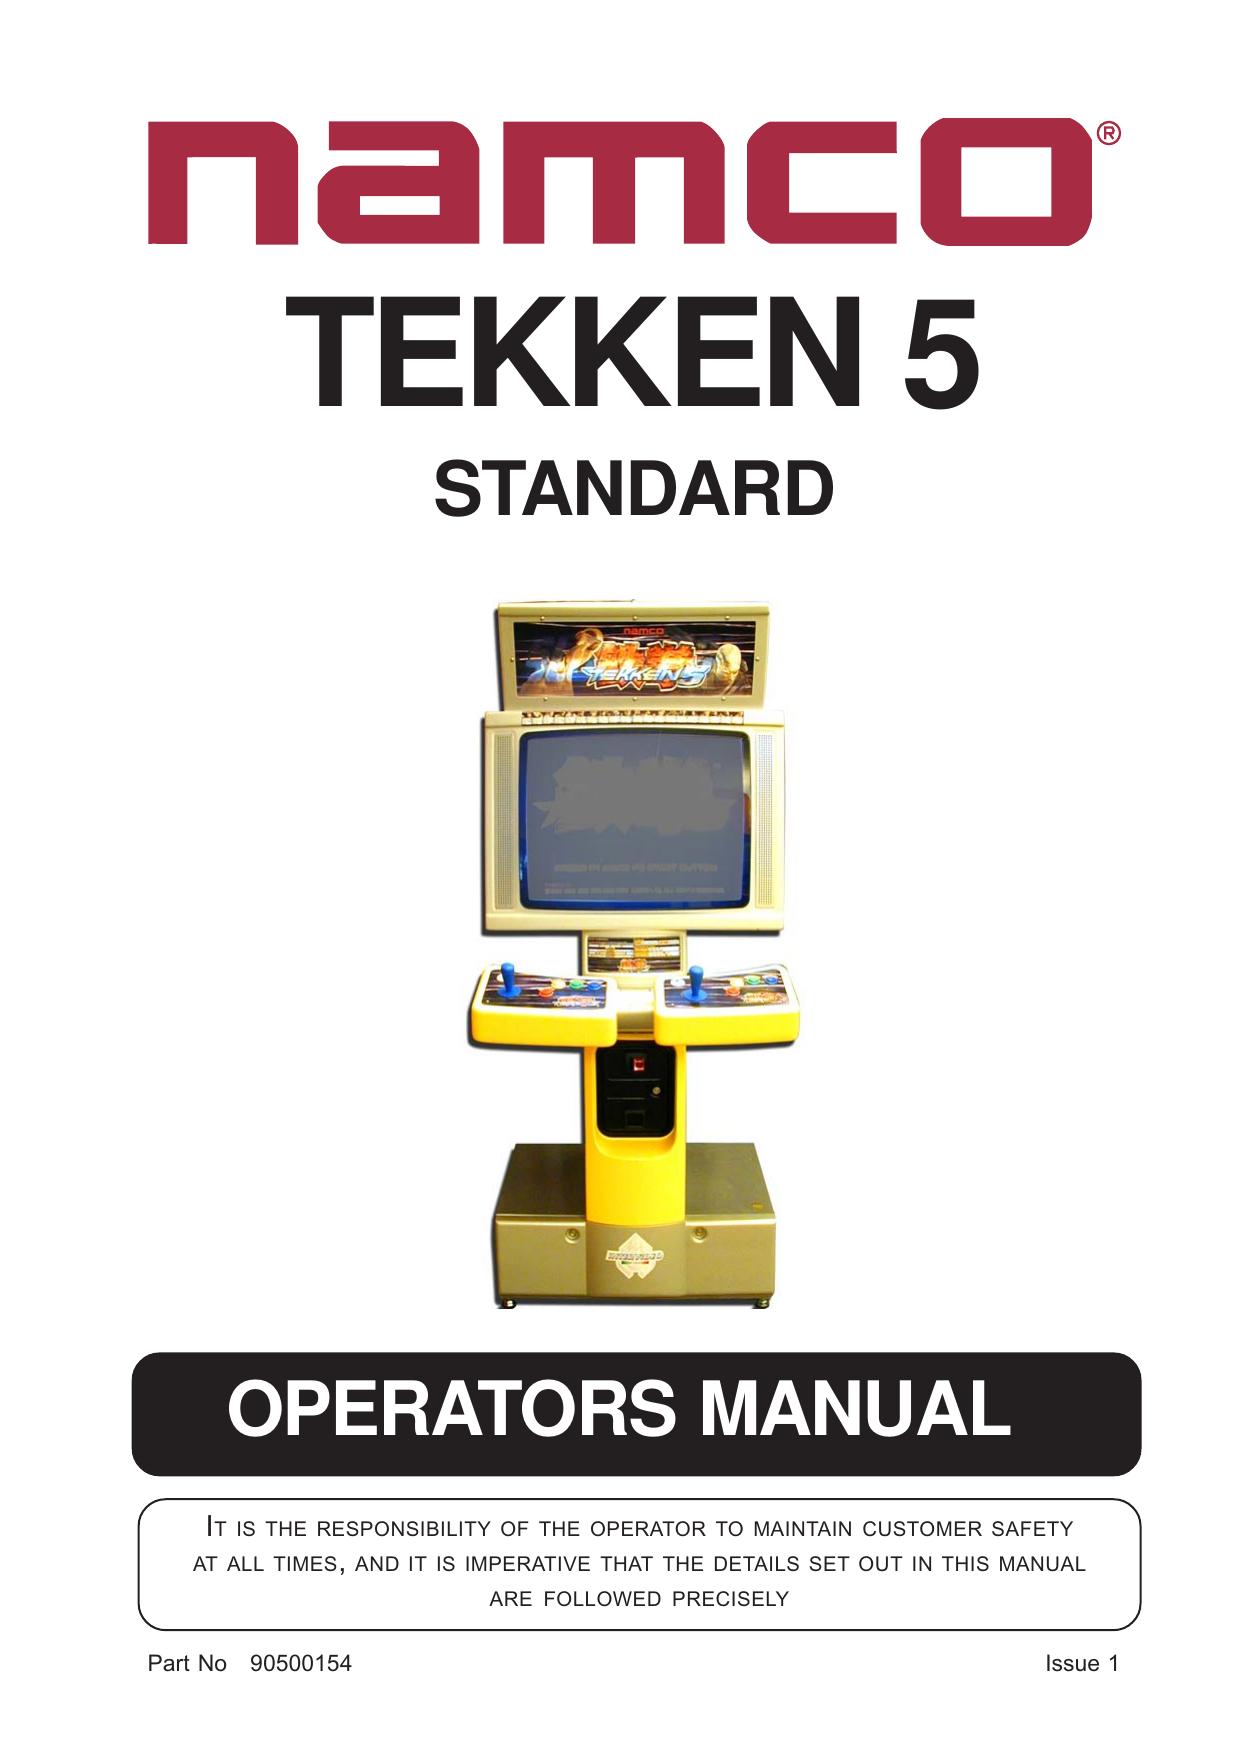 Operators Manual